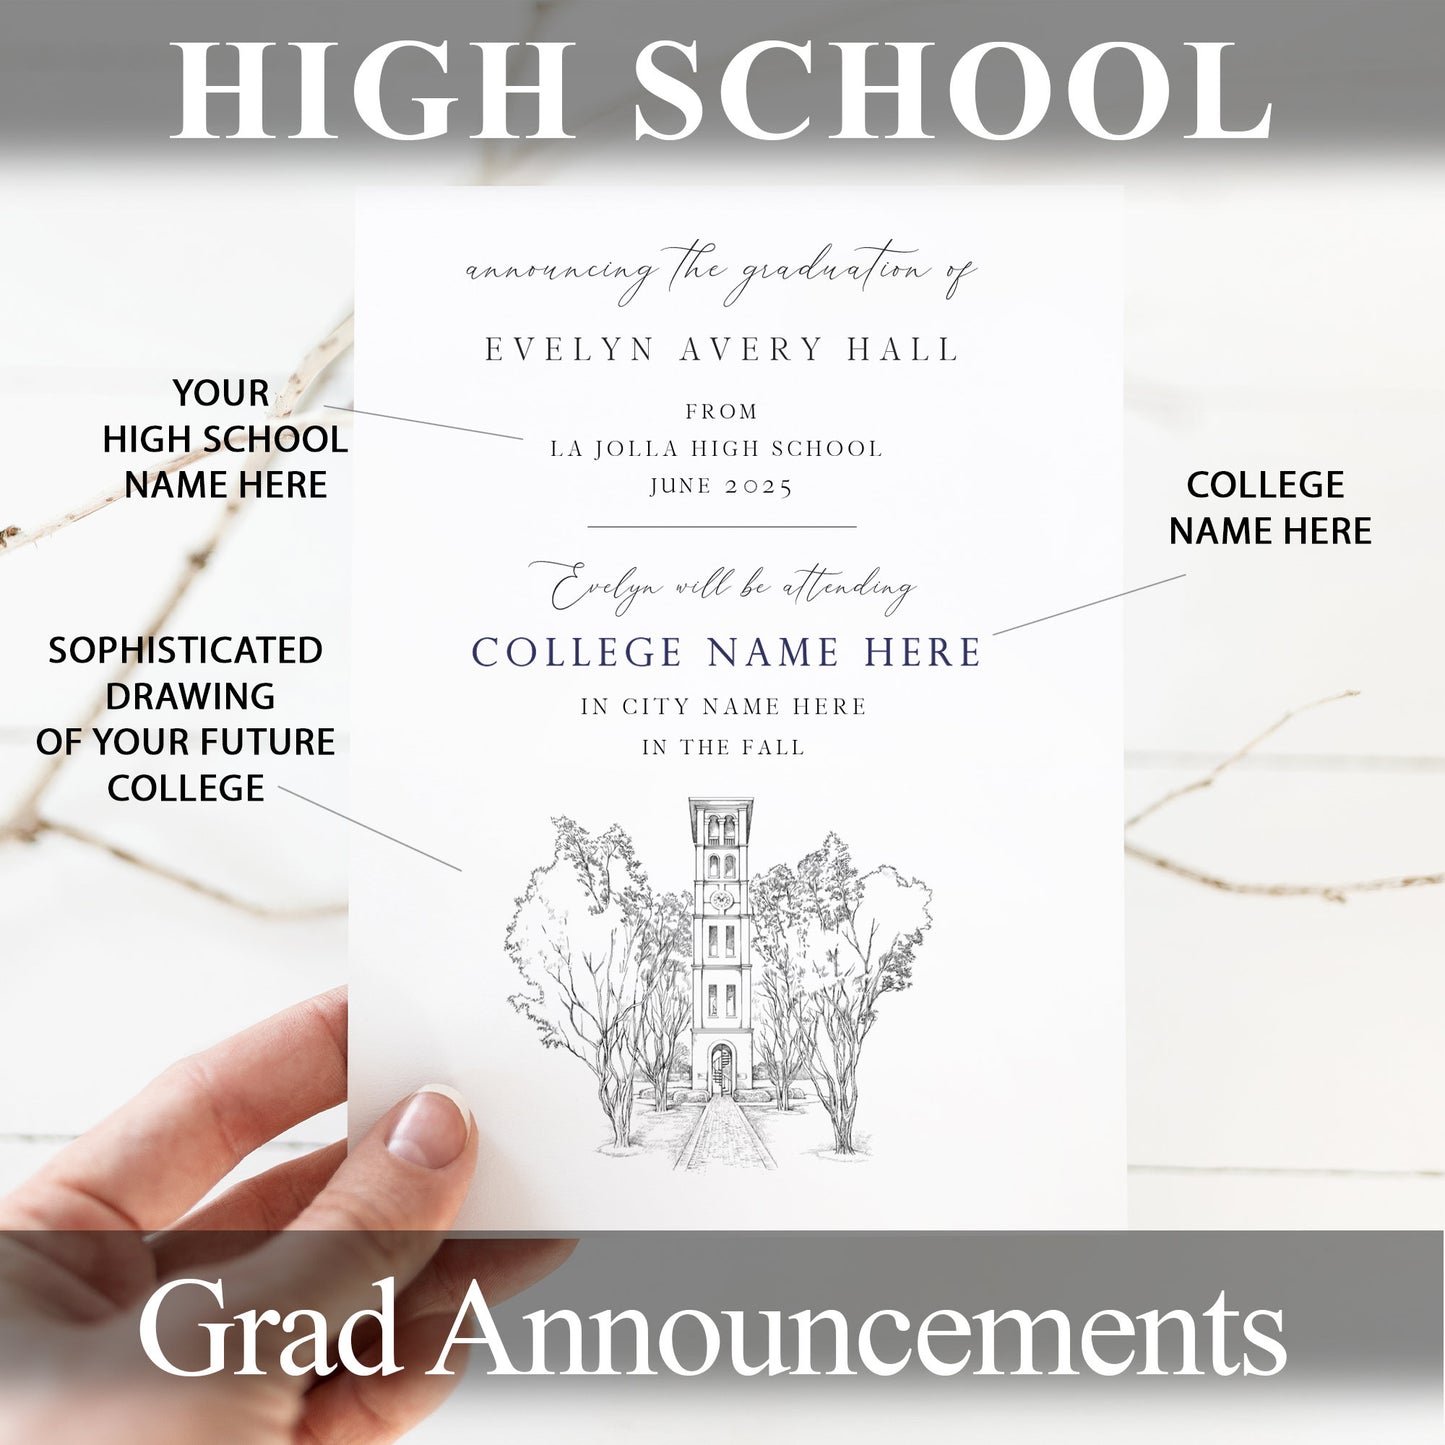 High School Graduation Announcements with College Bound University for Rhode Island Schools, HS Grad, RI, Graduation, Grads Univ